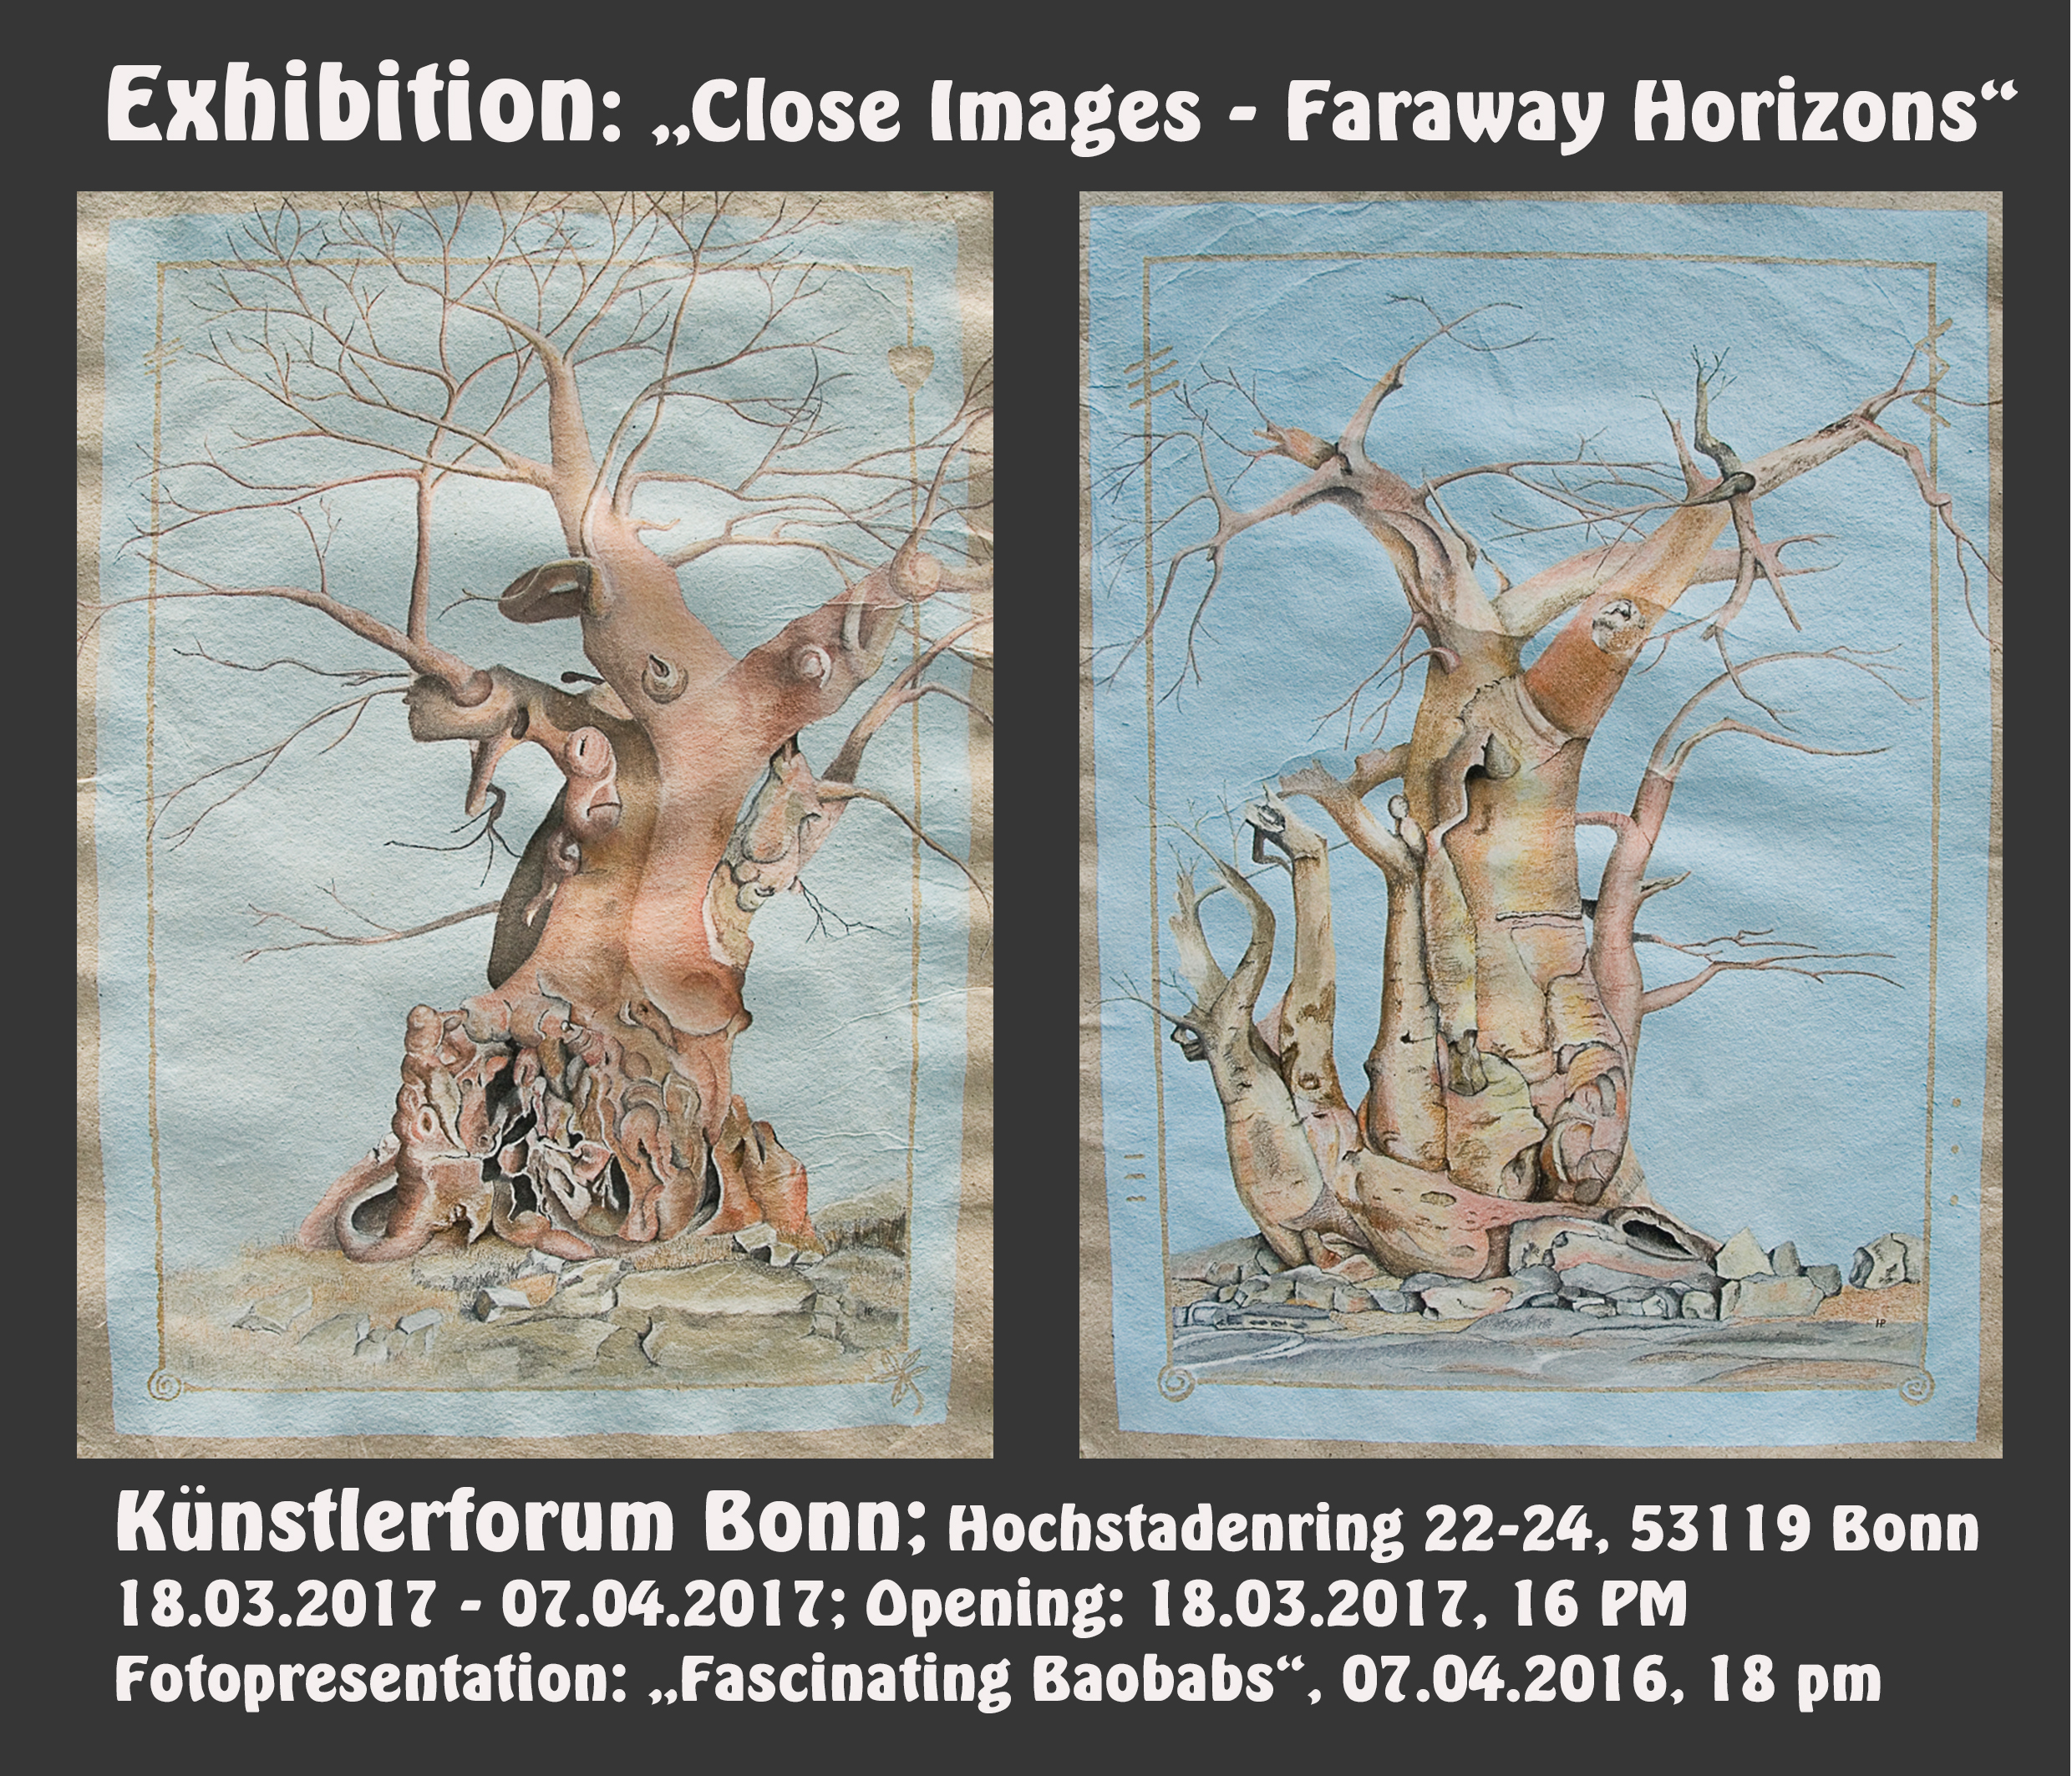 Annual Exhibition "Close Images - Faraway Horizons", art association BBK Bonn-Rhein/Sieg, at Künstlerforum Bonn